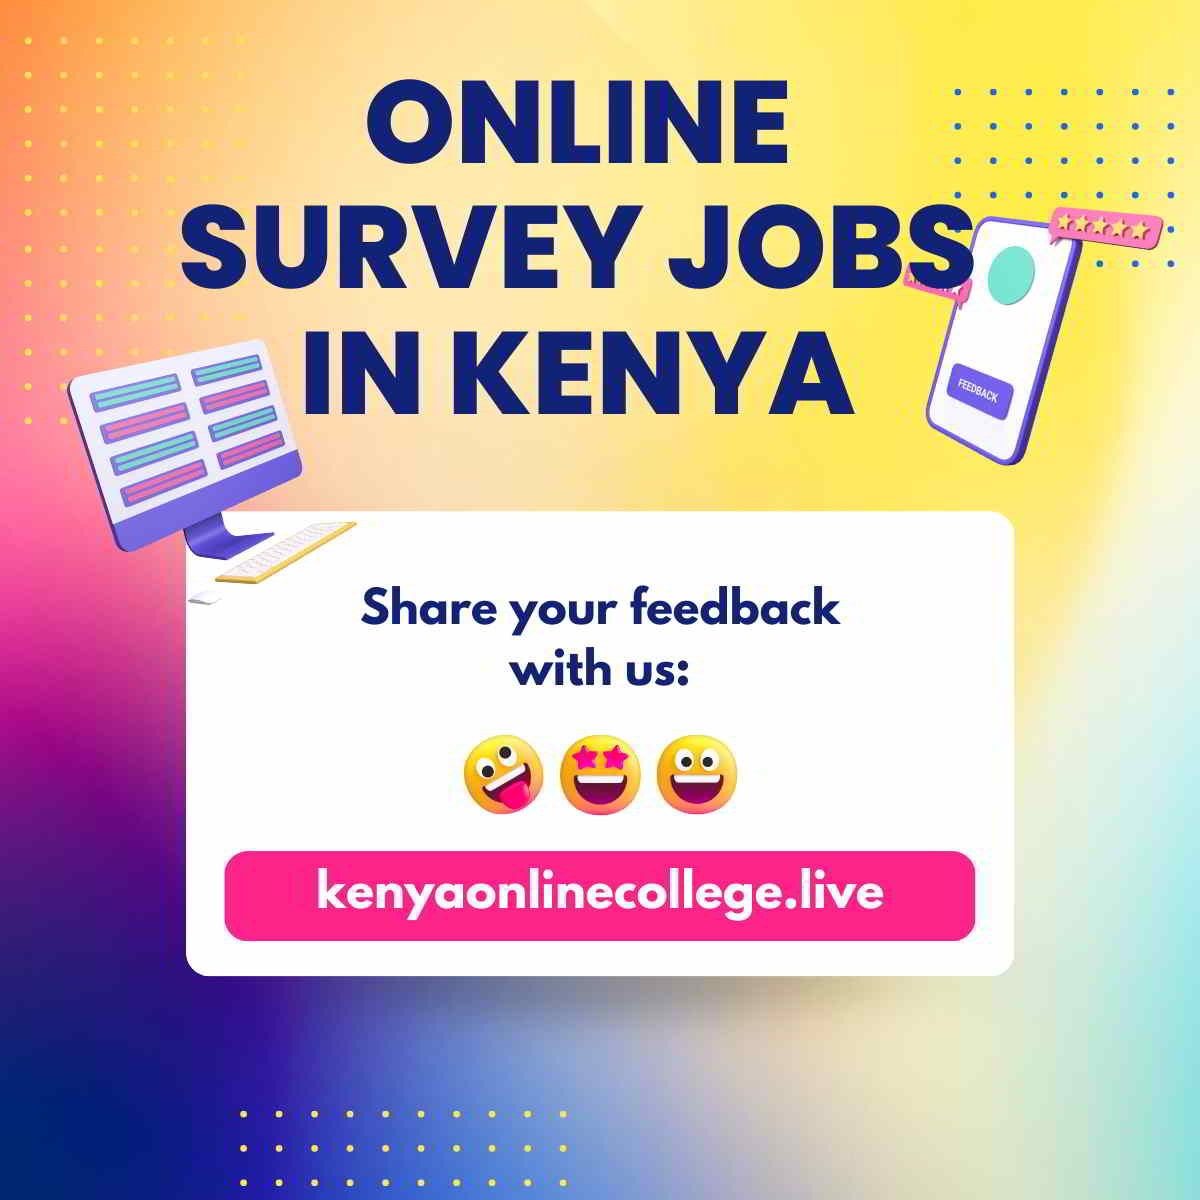 Online survey jobs in Kenya